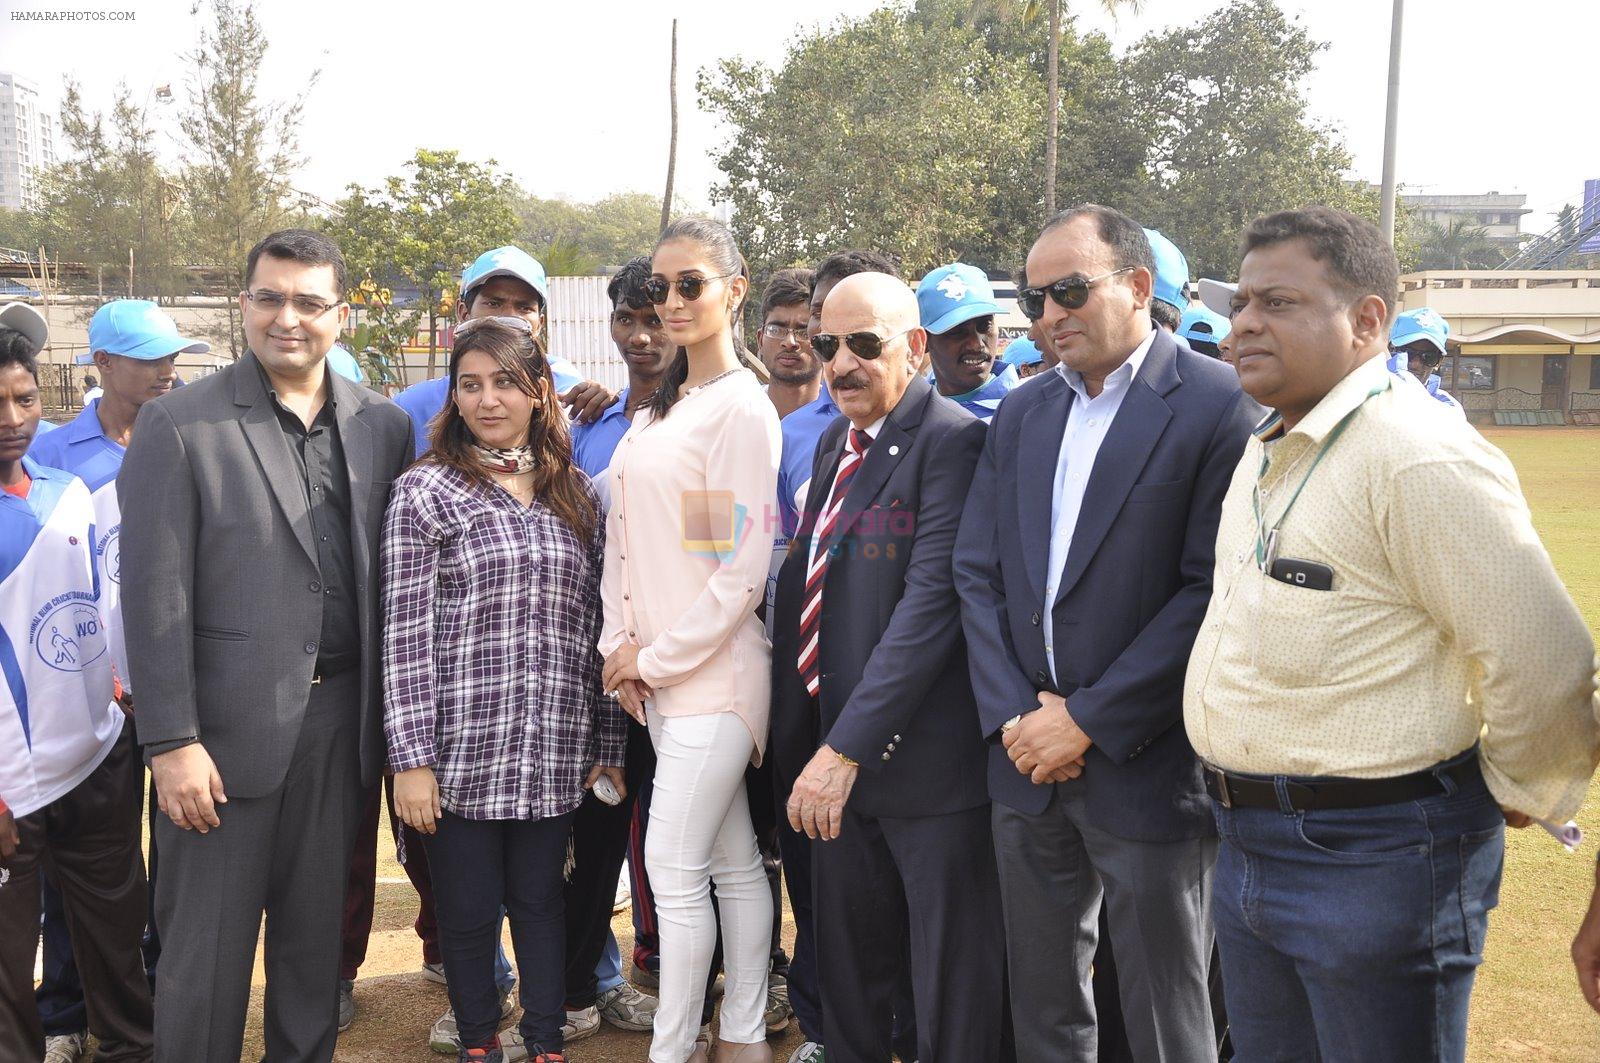 Miss India Alankrita Sahai & Suraj Samat inaugurate the National Blind Cricket Tournament in Islam Gymkhana on 22nd Jan 2015